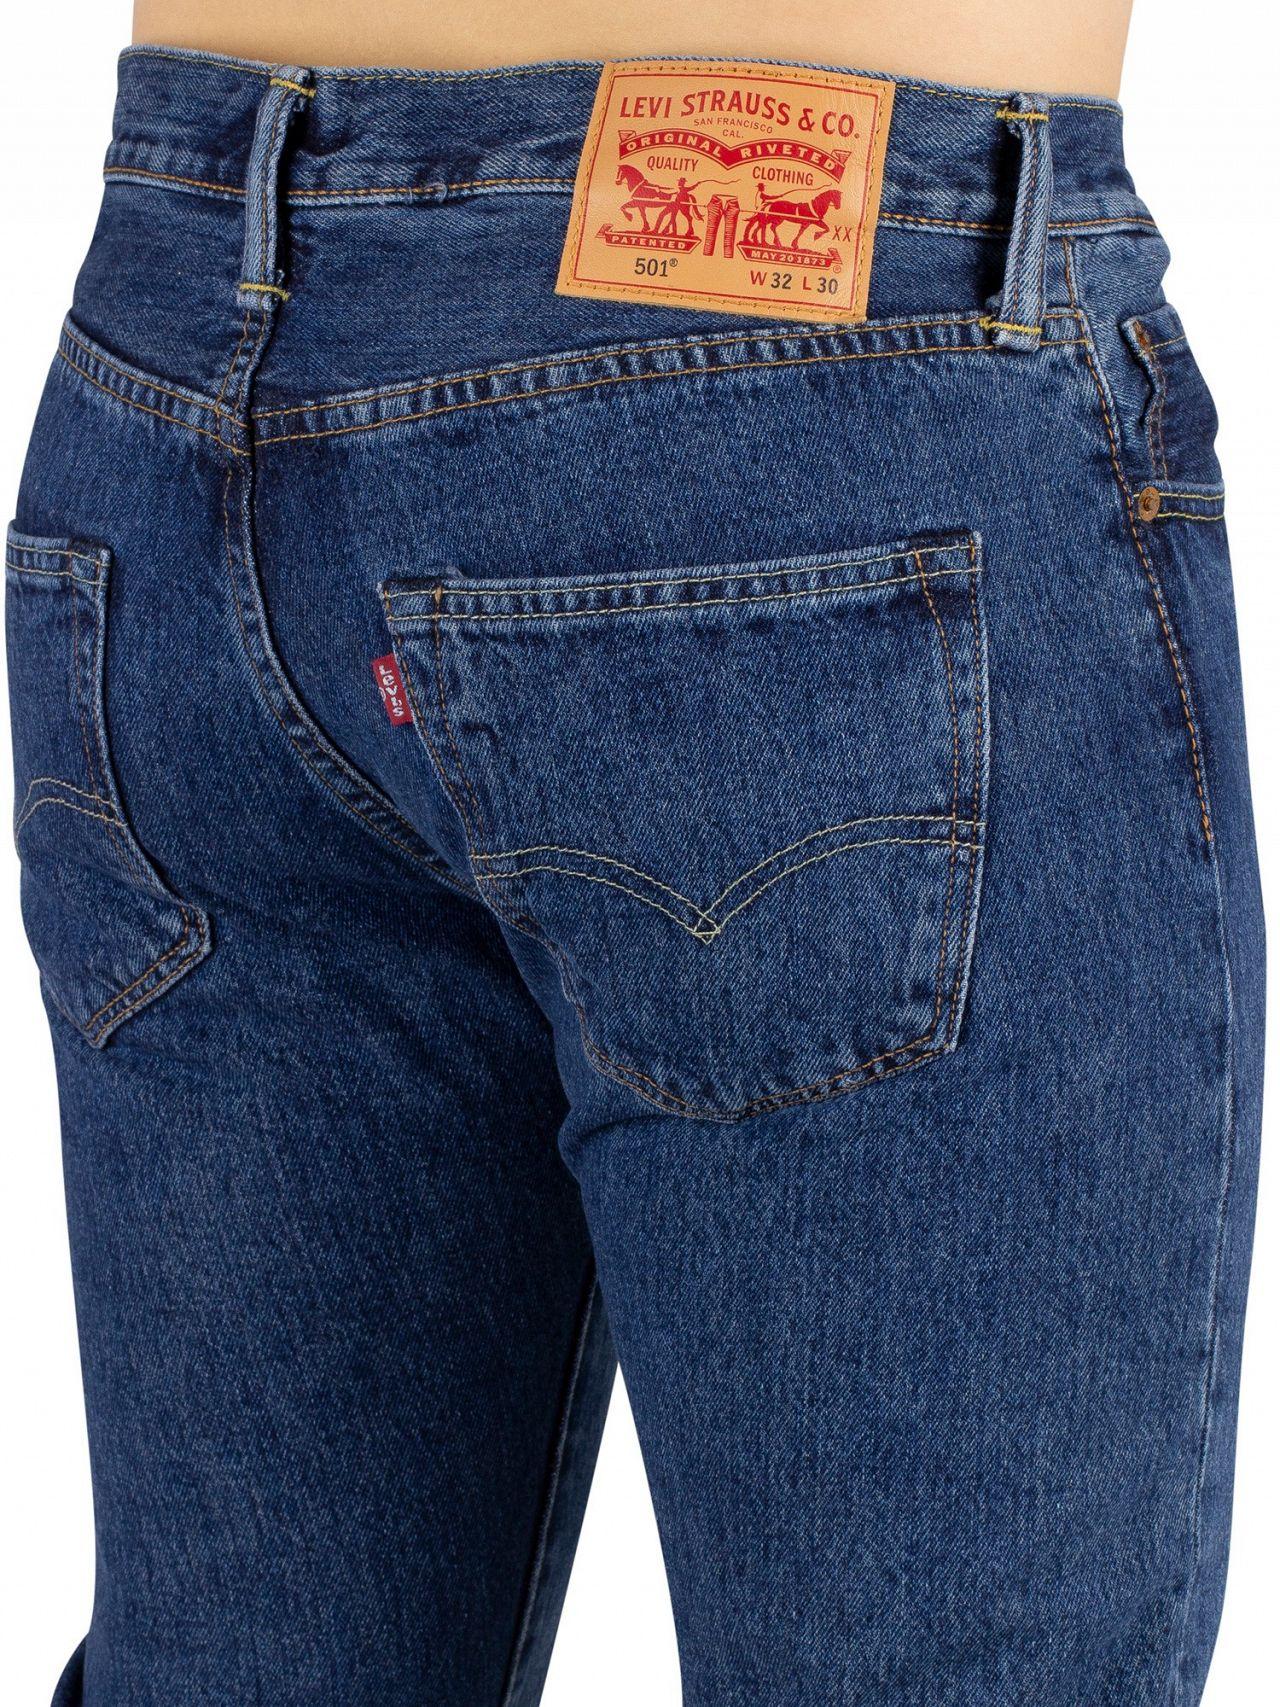 Levi's Stonewash 501 Original Fit Denim Jeans in Blue for Men - Lyst